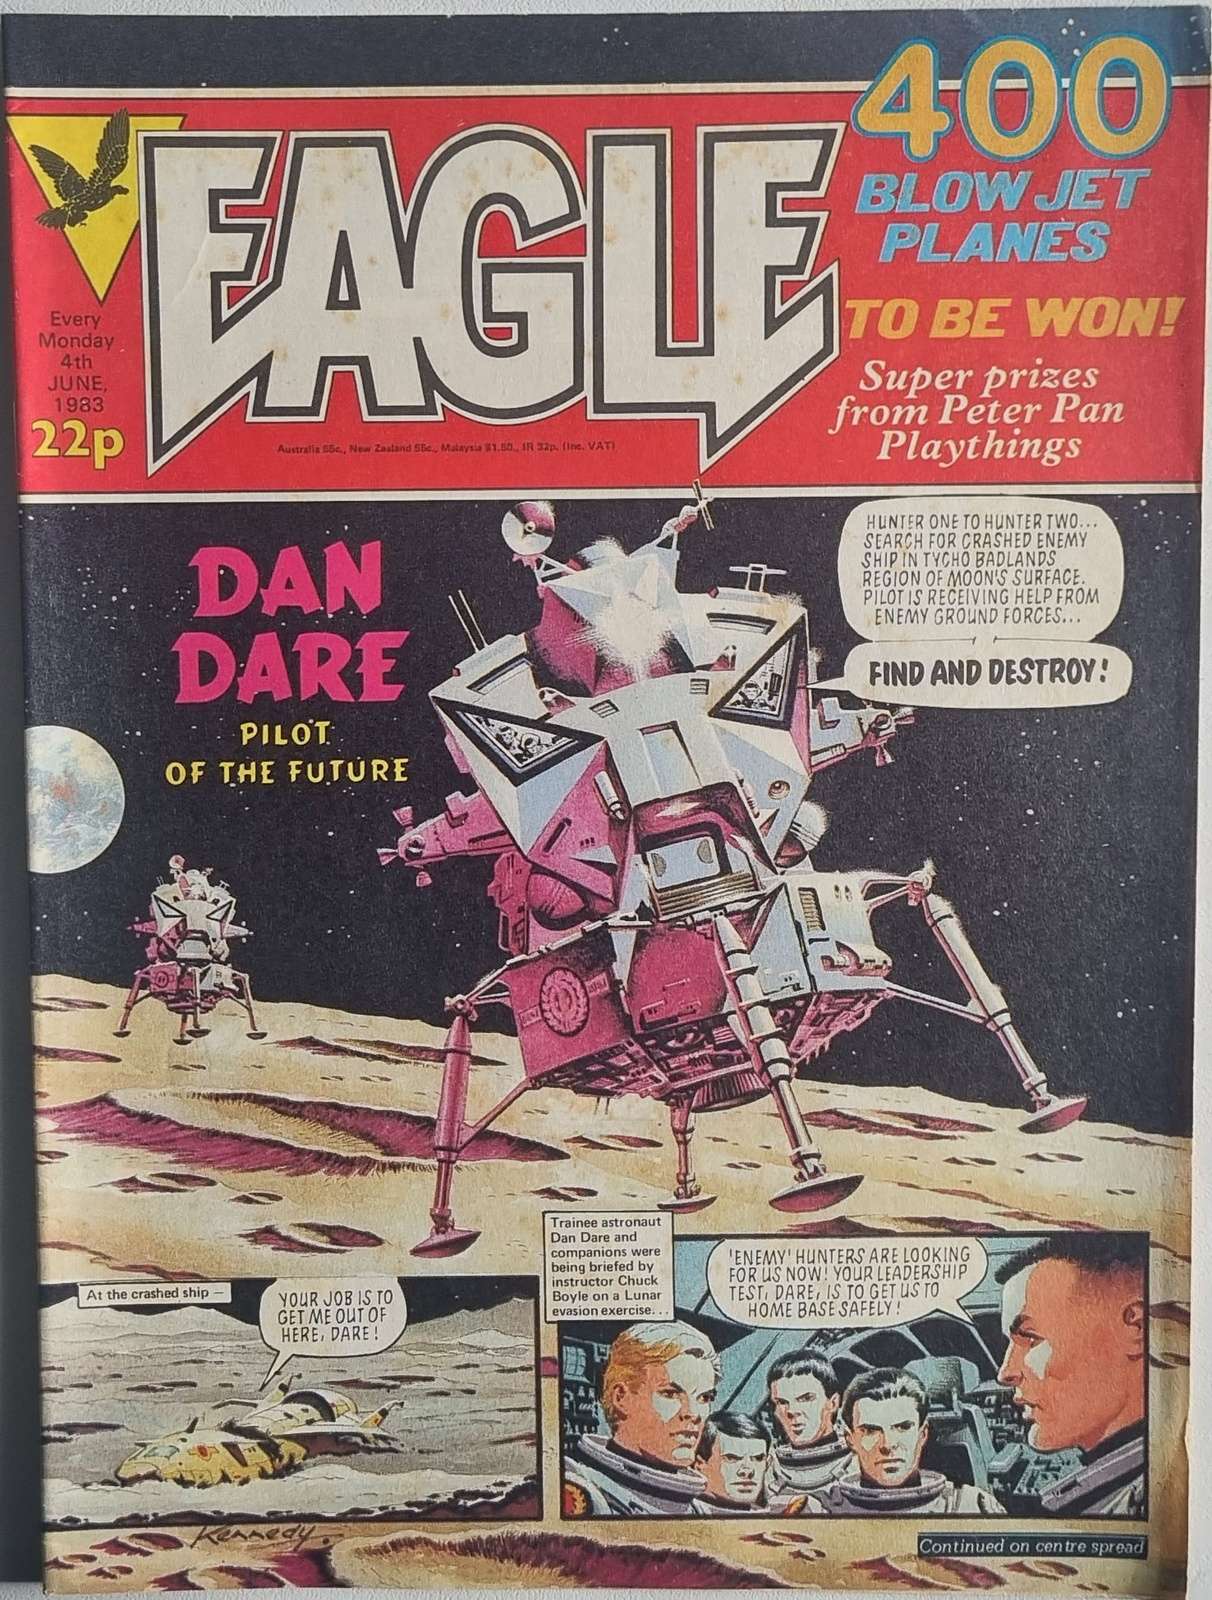 Eagle - Monday 4th June 1983